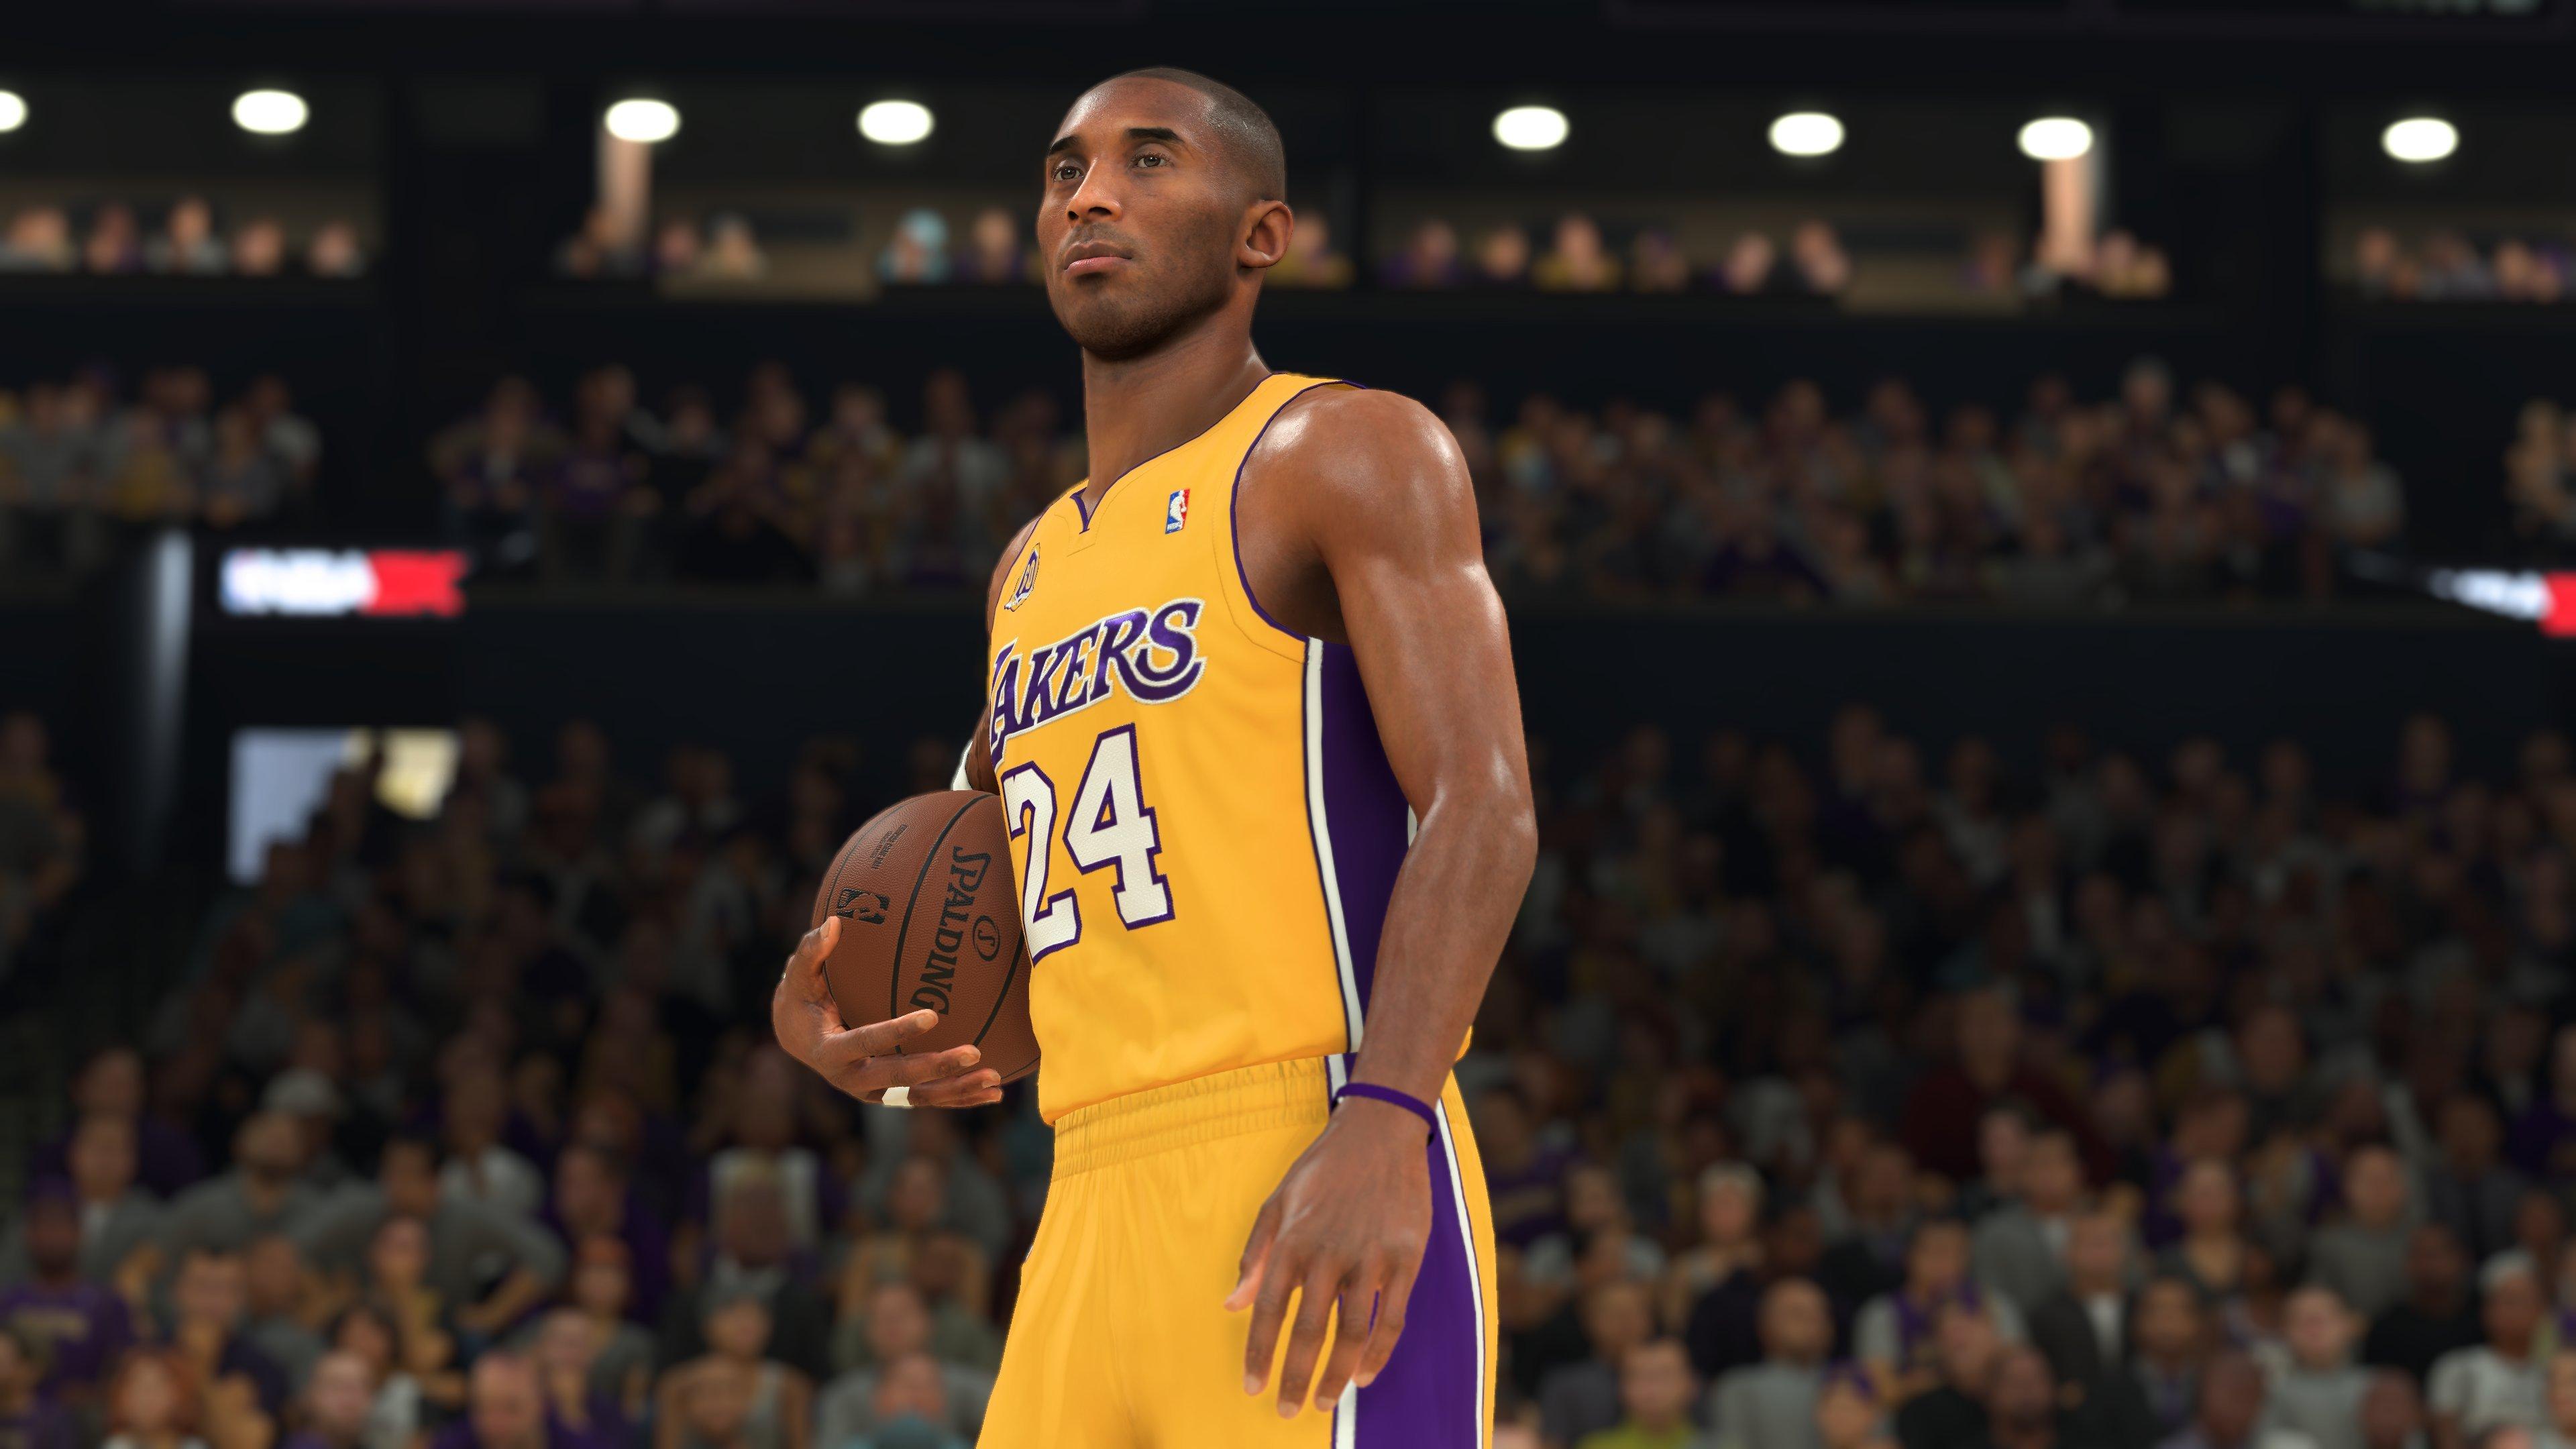 NBA 2K24 gets cross-play, puts Kobe Bryant on the cover again